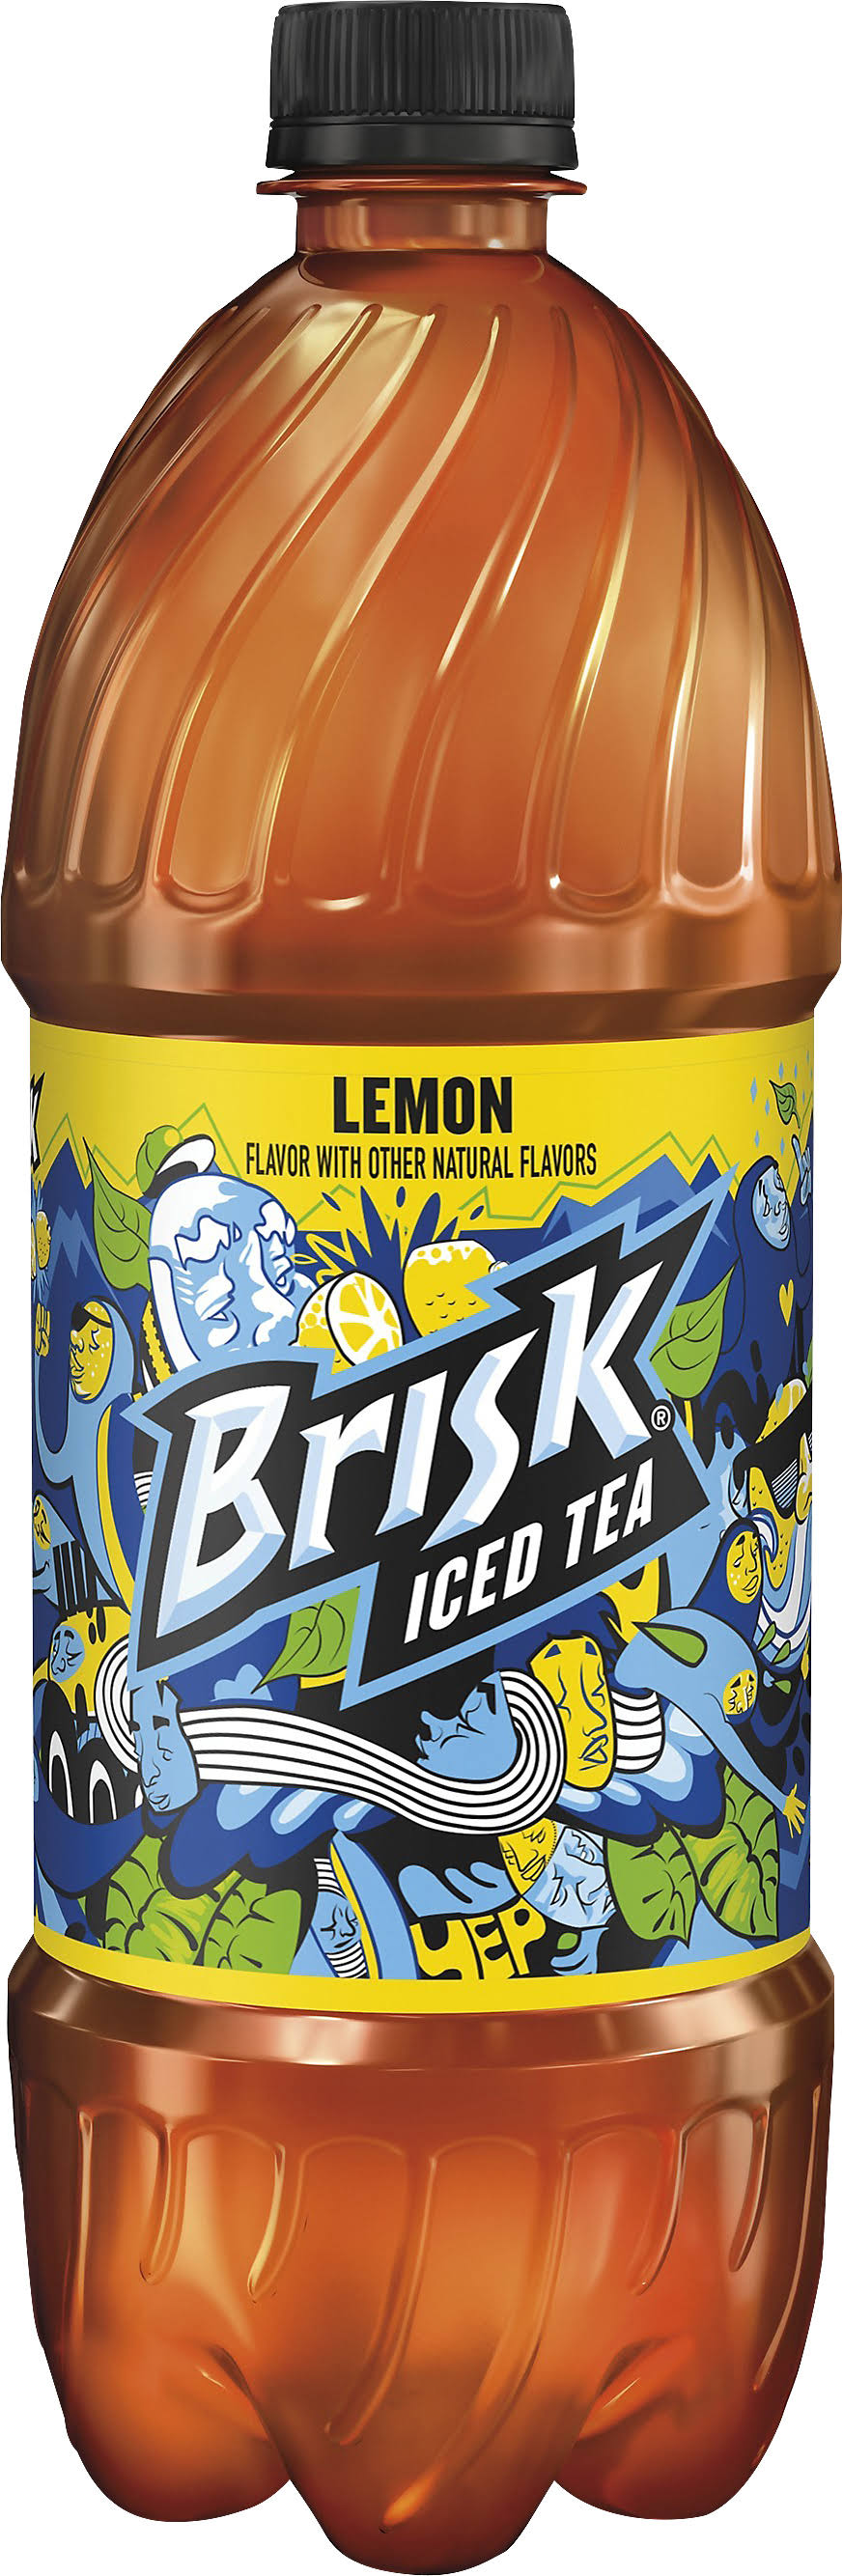 Brisk Iced Tea 1 Ltr Lemon Pet Bottle Wholesale, Cheap, Discount, Bulk (Pack of 15)